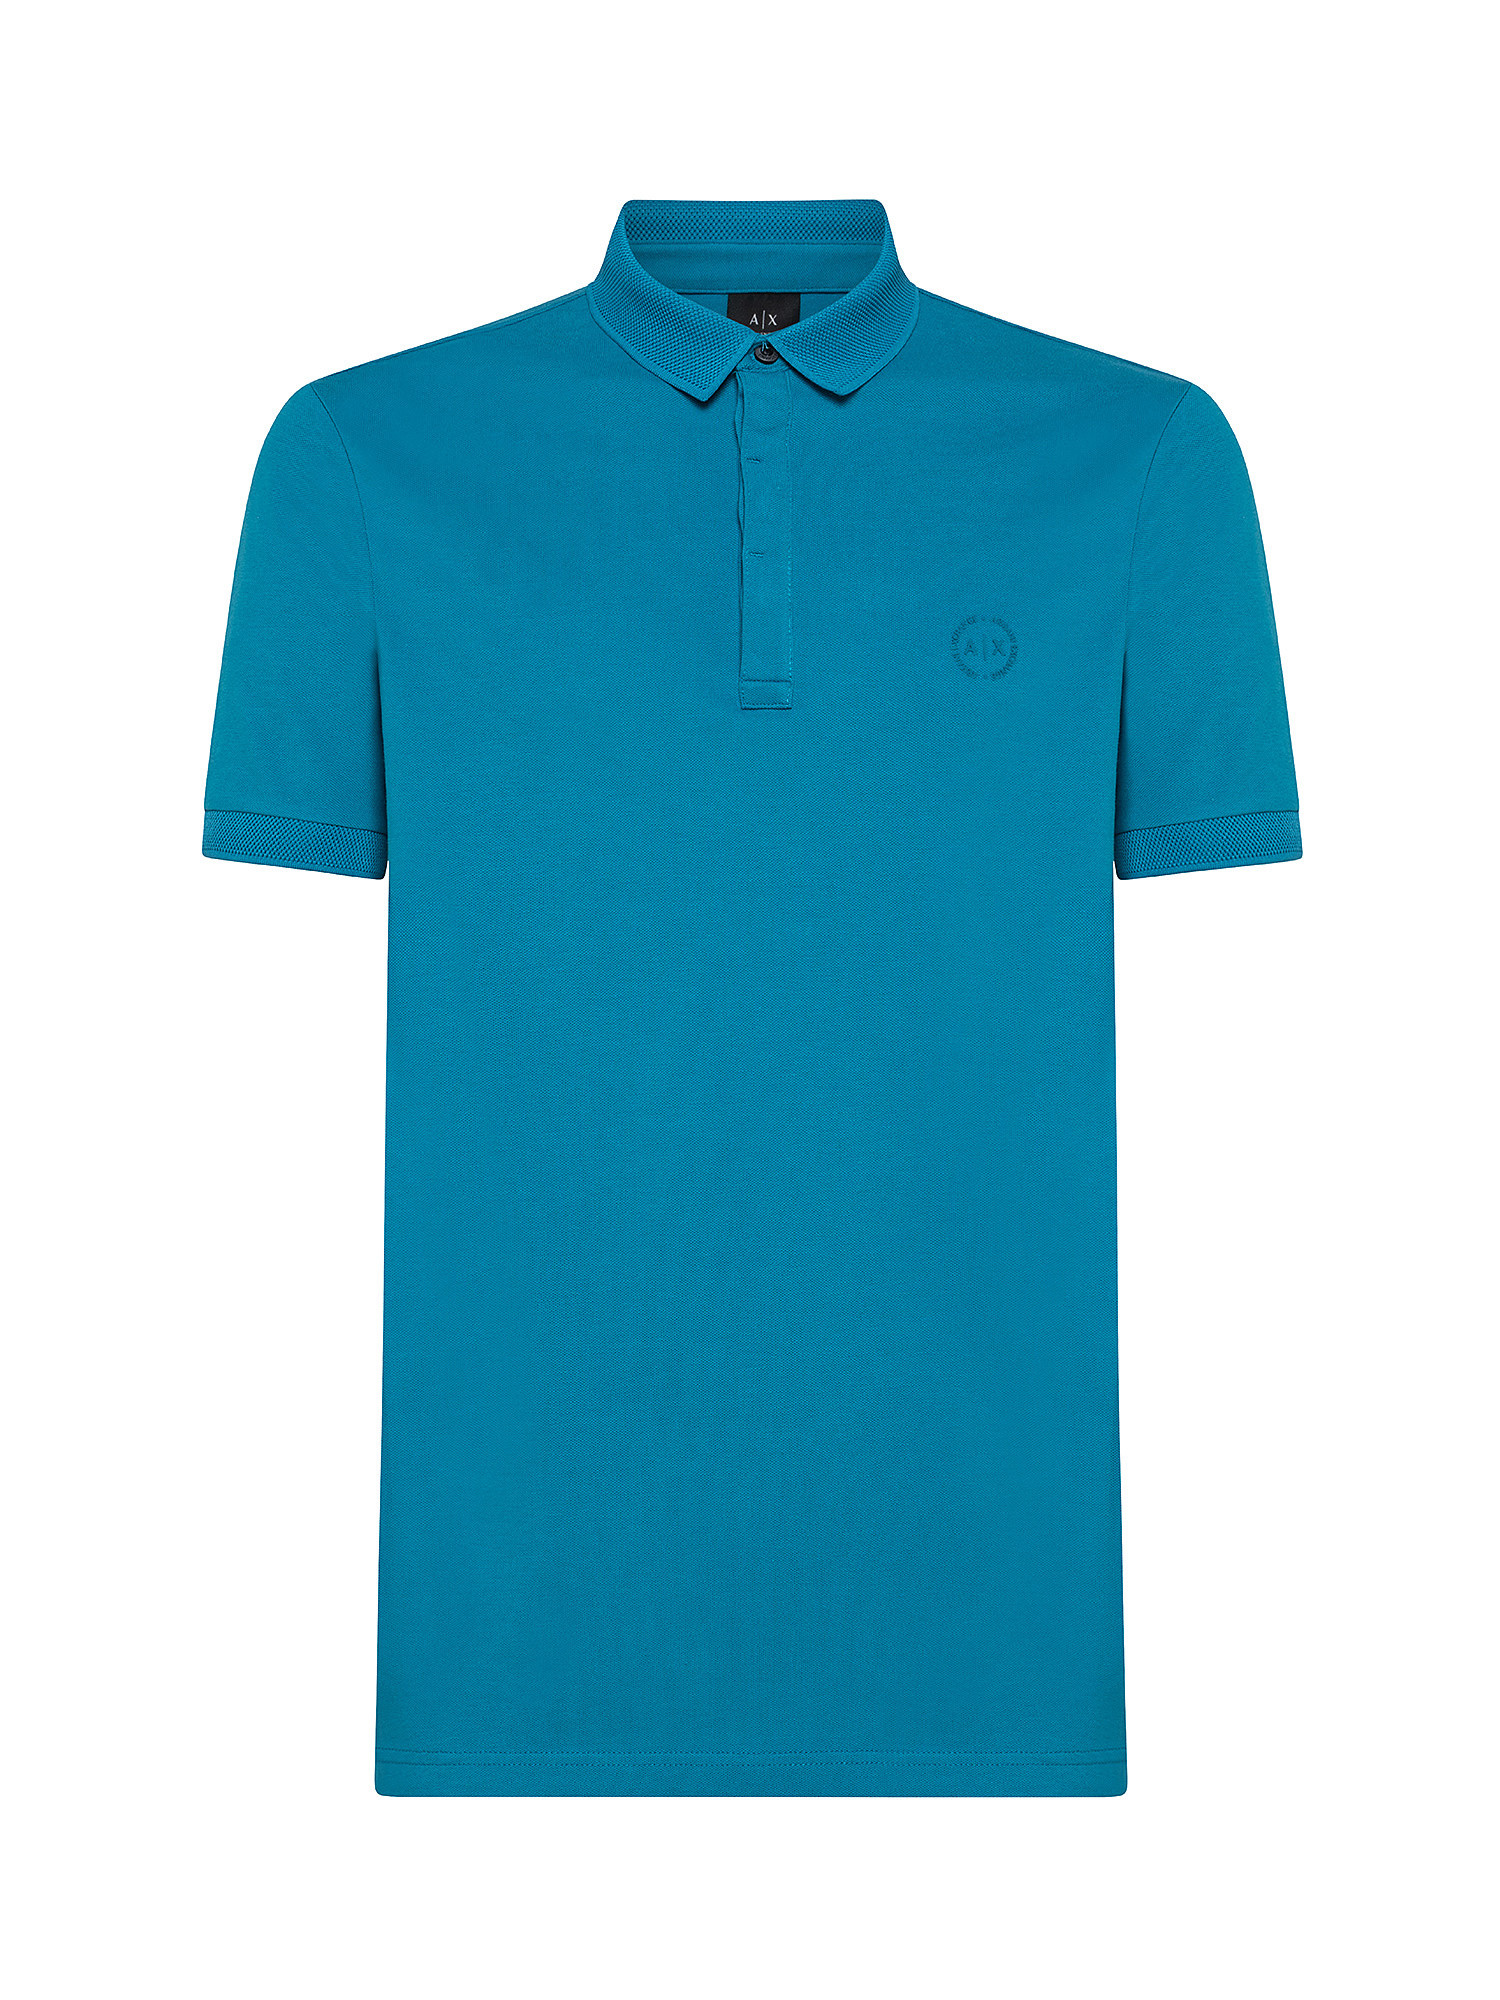 Polo shirt, Turquoise, large image number 0